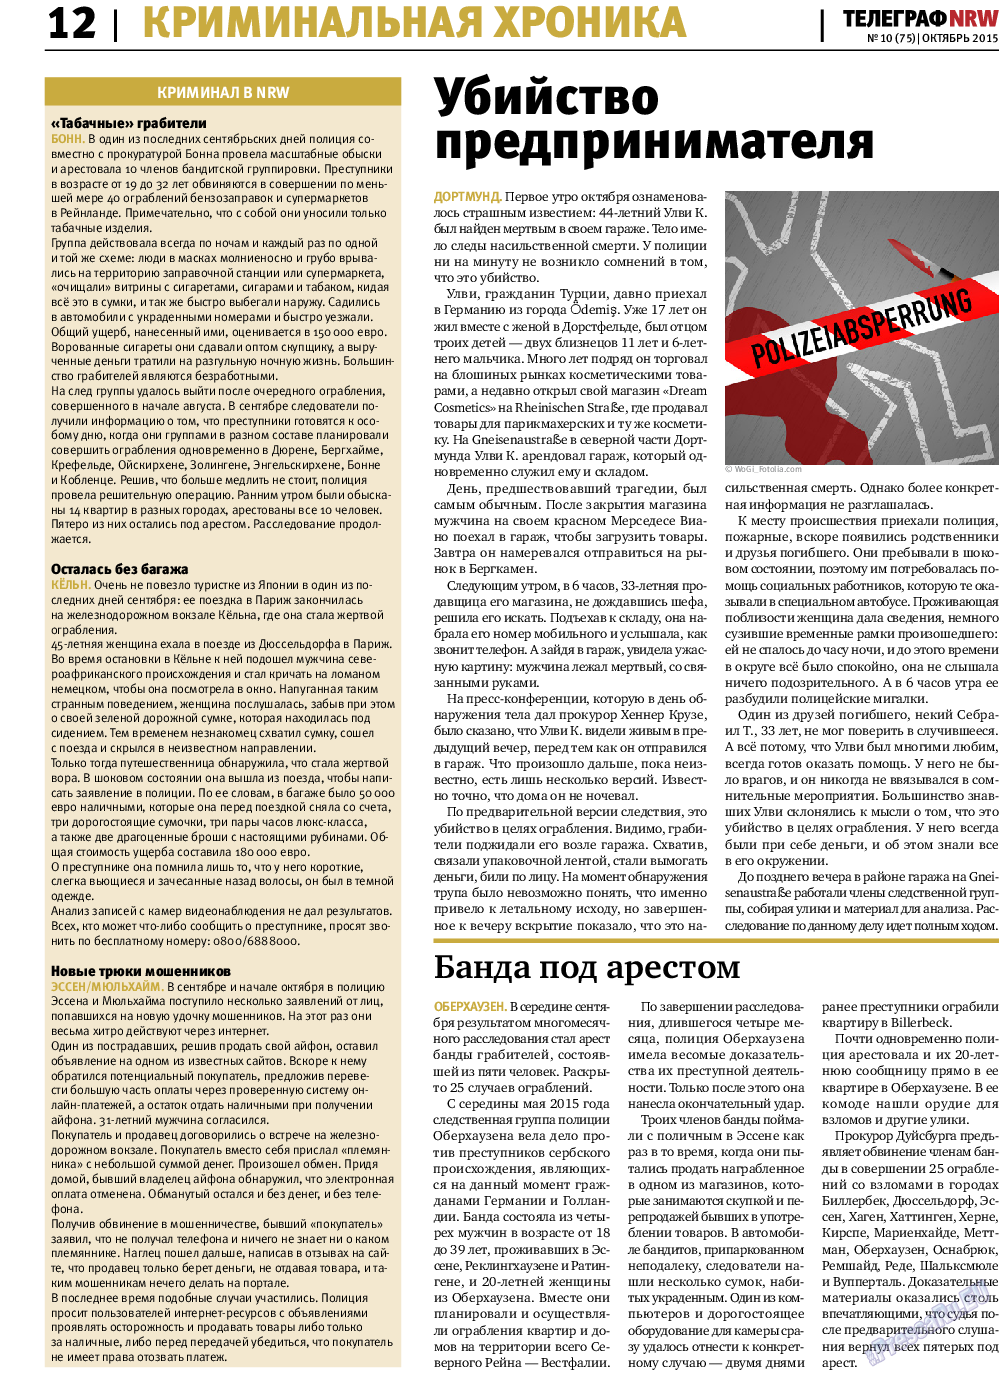 Телеграф NRW, газета. 2015 №10 стр.12